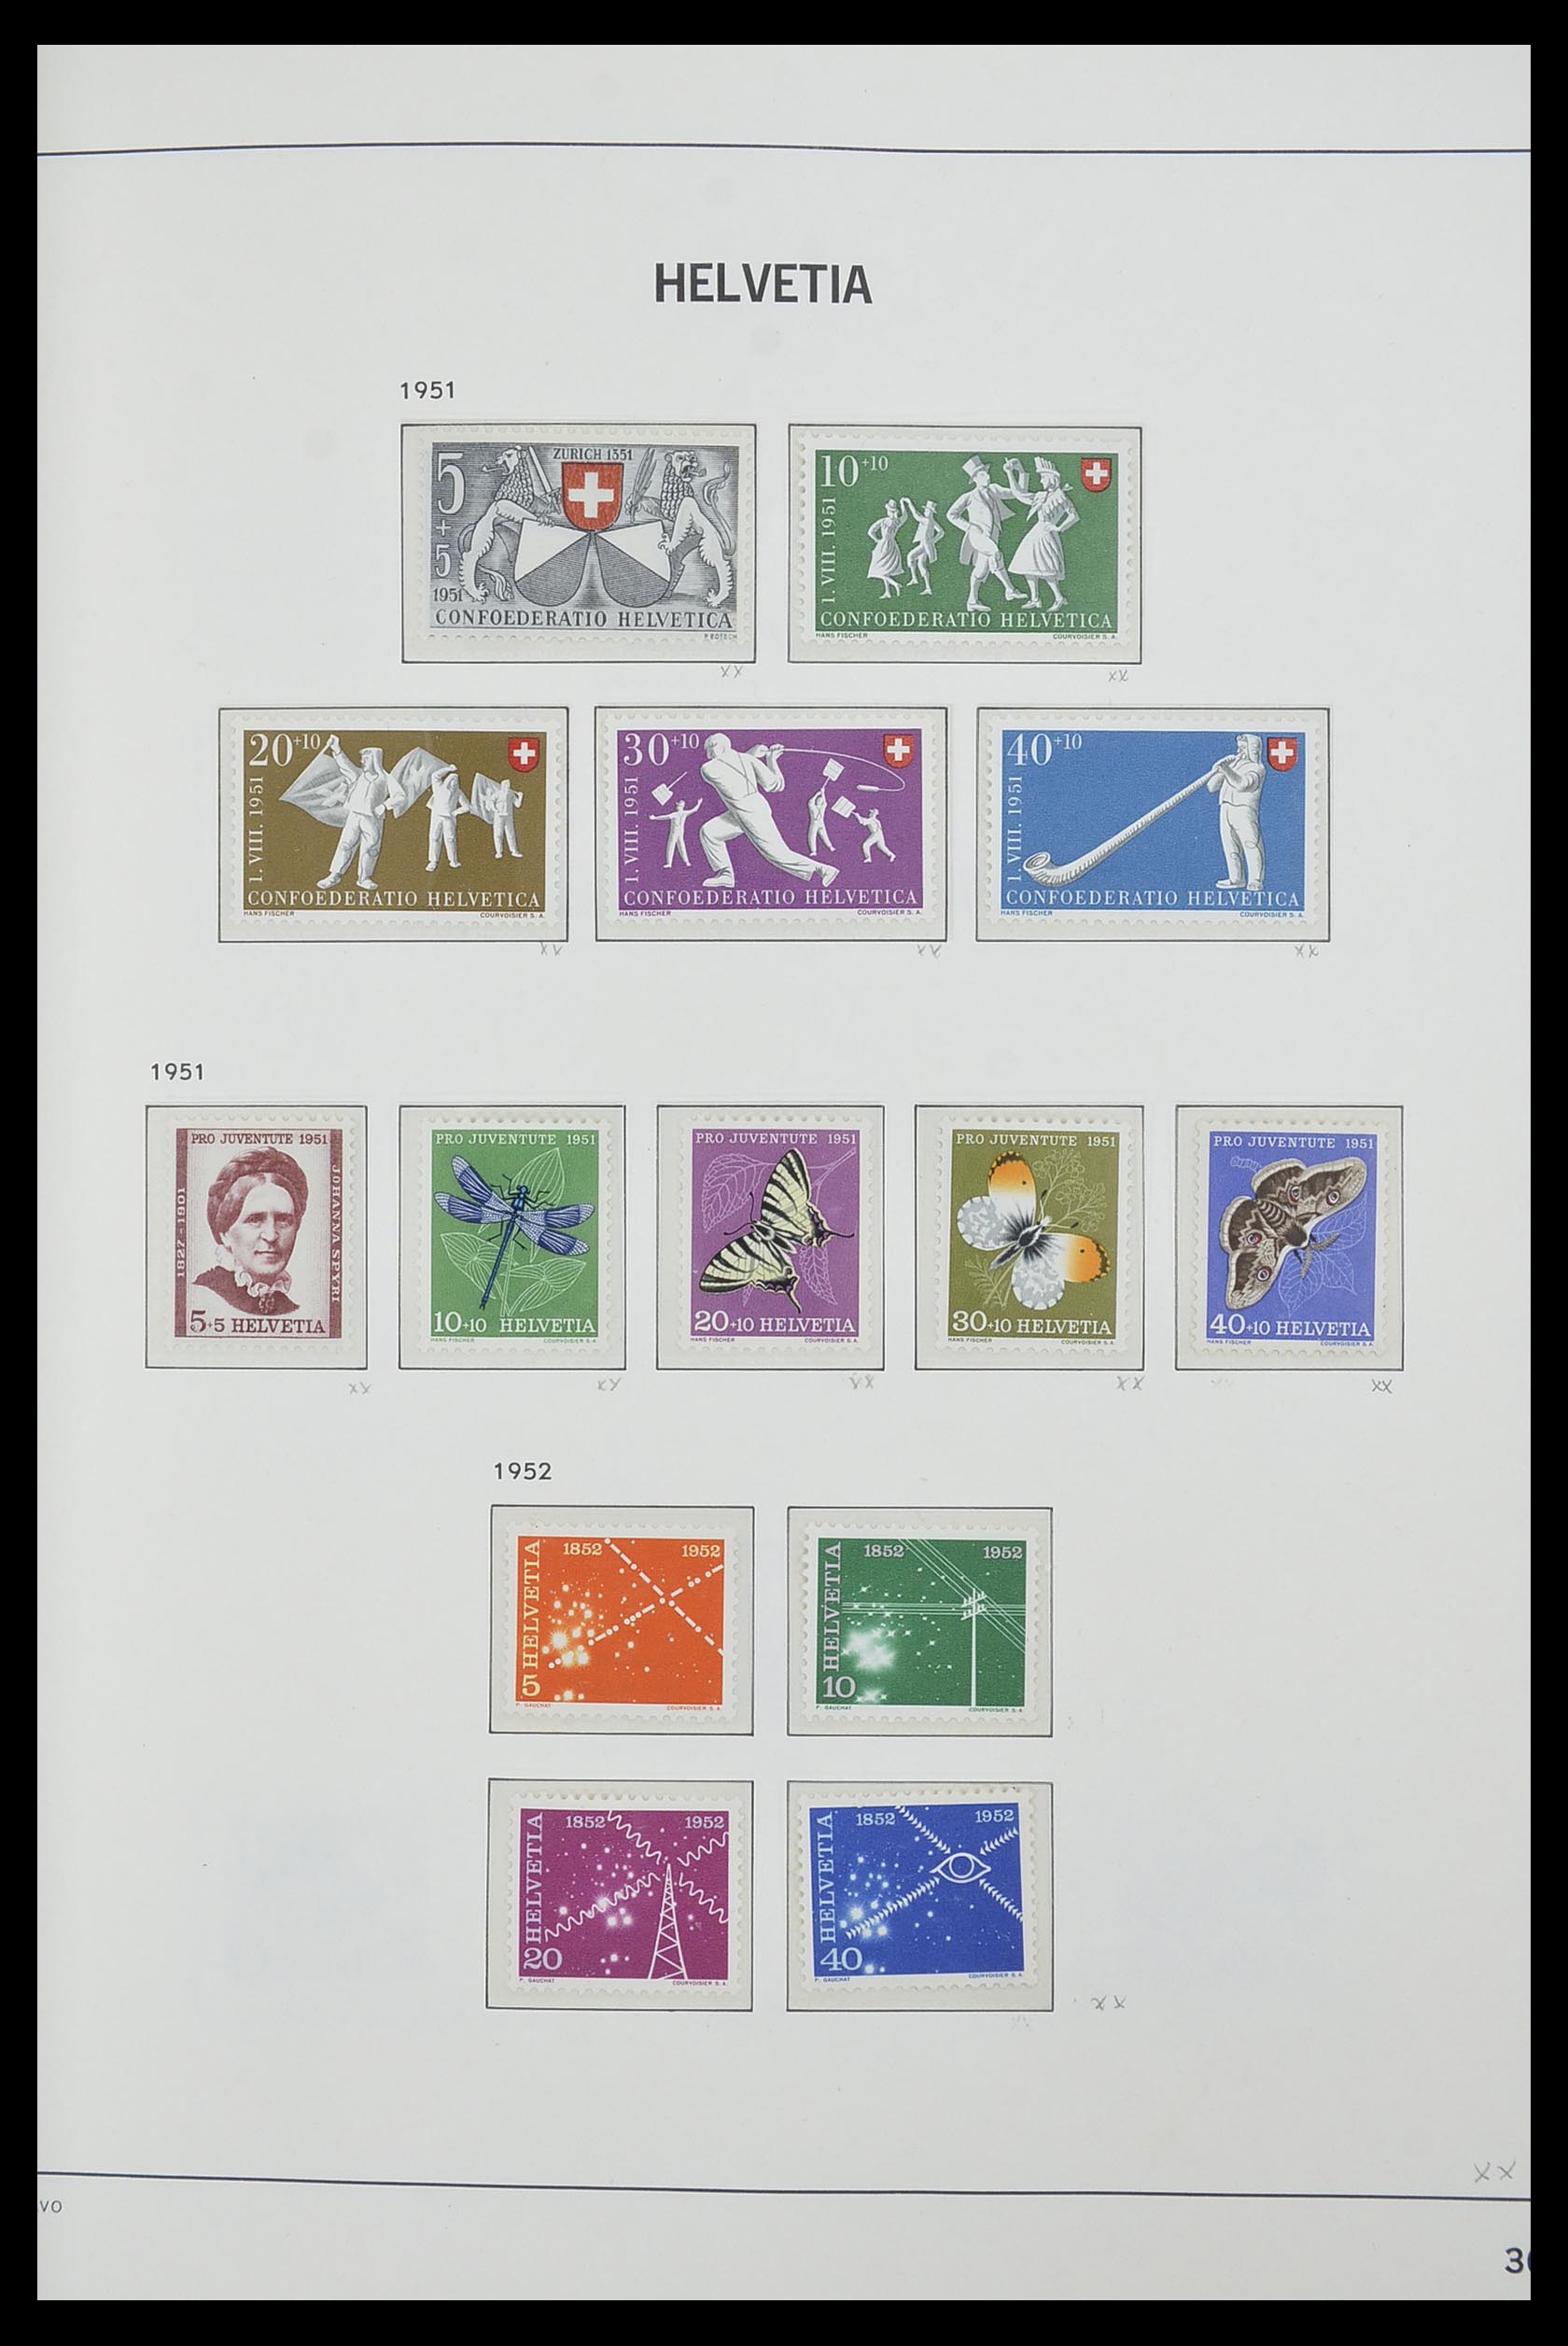 33556 036 - Stamp collection 33556 Switzerland 1862-2000.